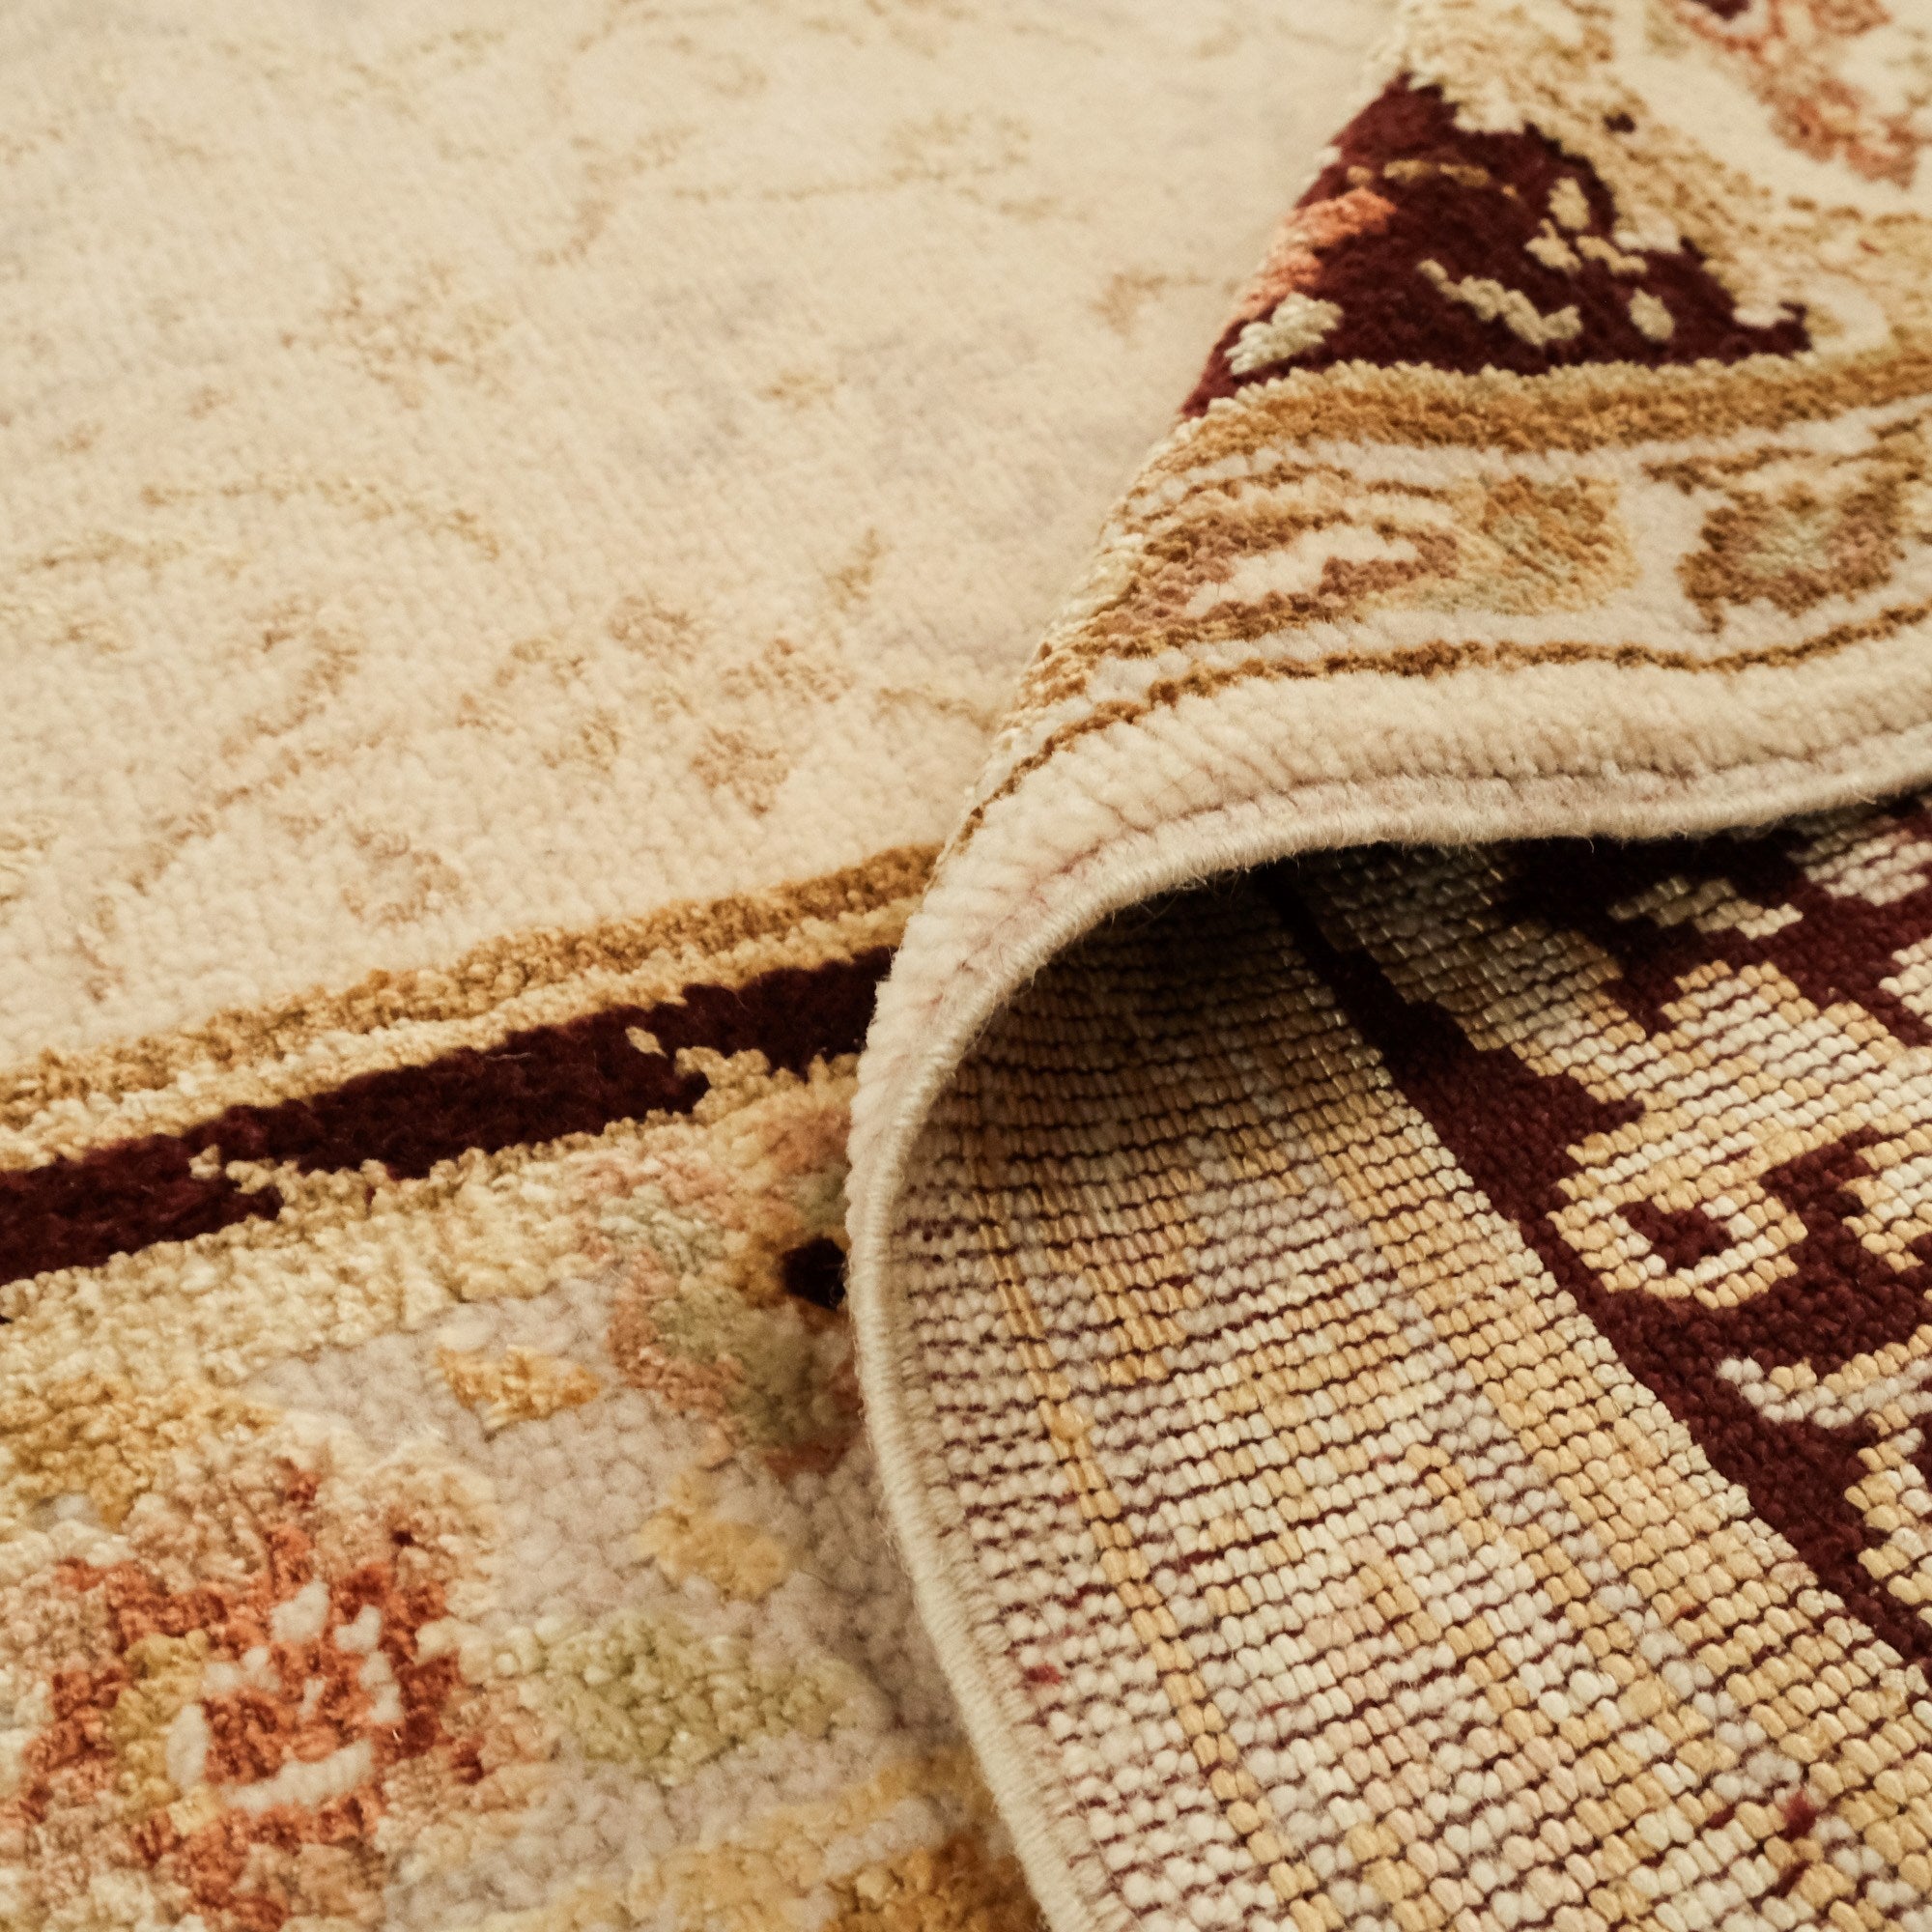 Ottoman Series Frame Design Hand Woven Carpet